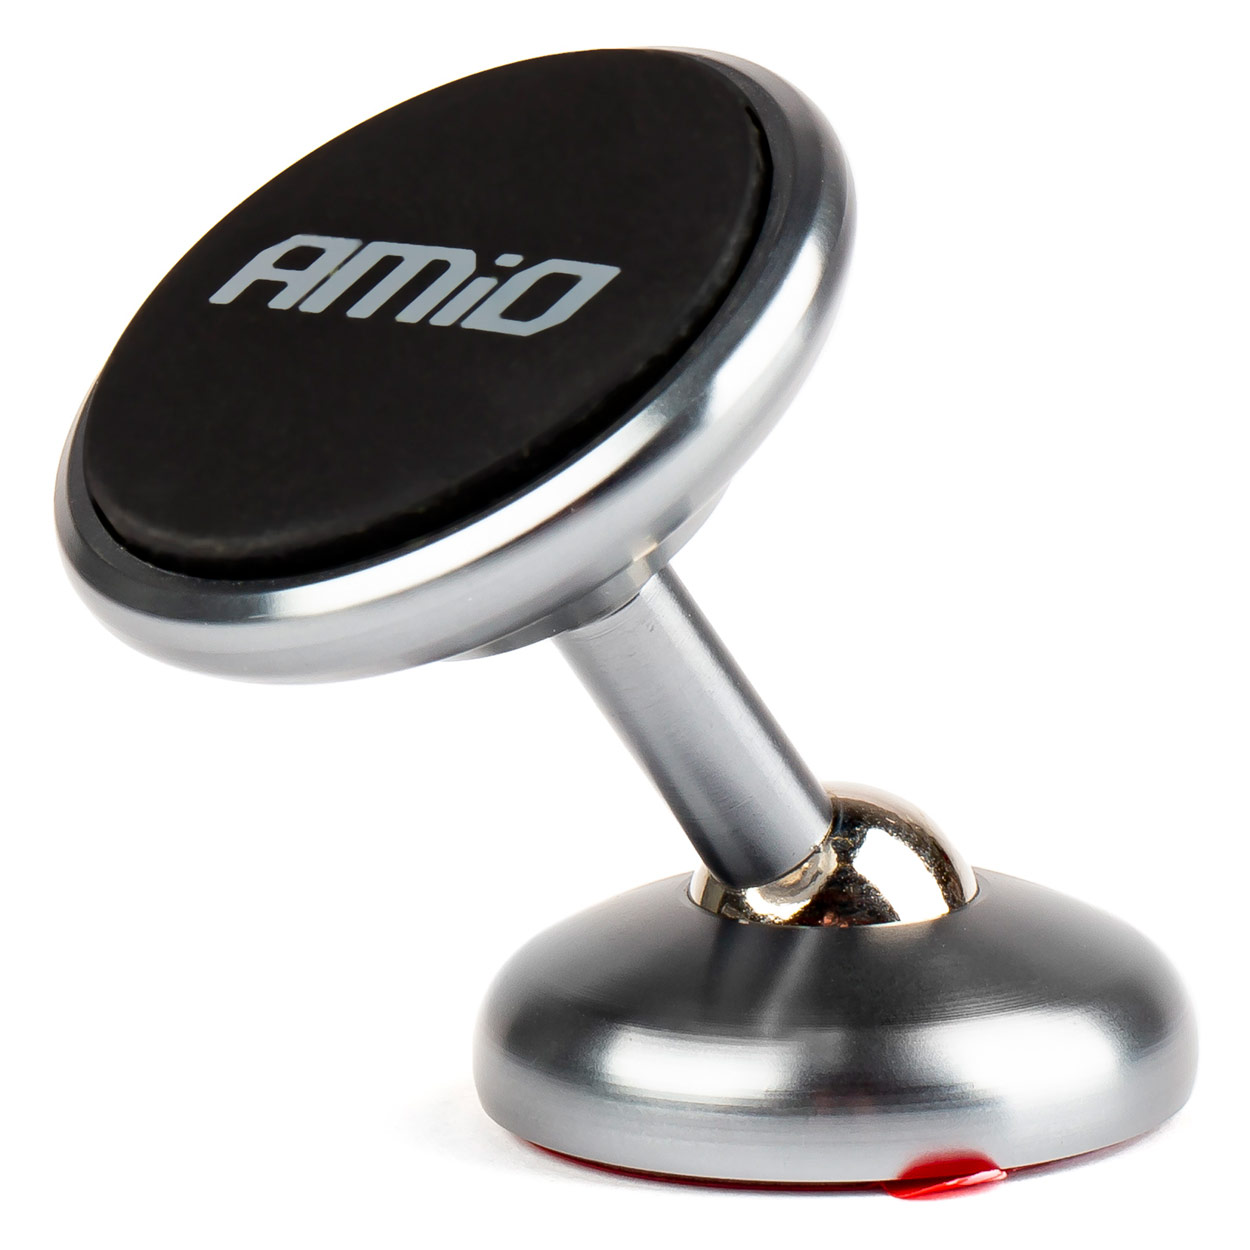 Suport auto pentru telefon AMIO HOLD-10 magnetic, brat reglabil, fixare banda dubla adeziva